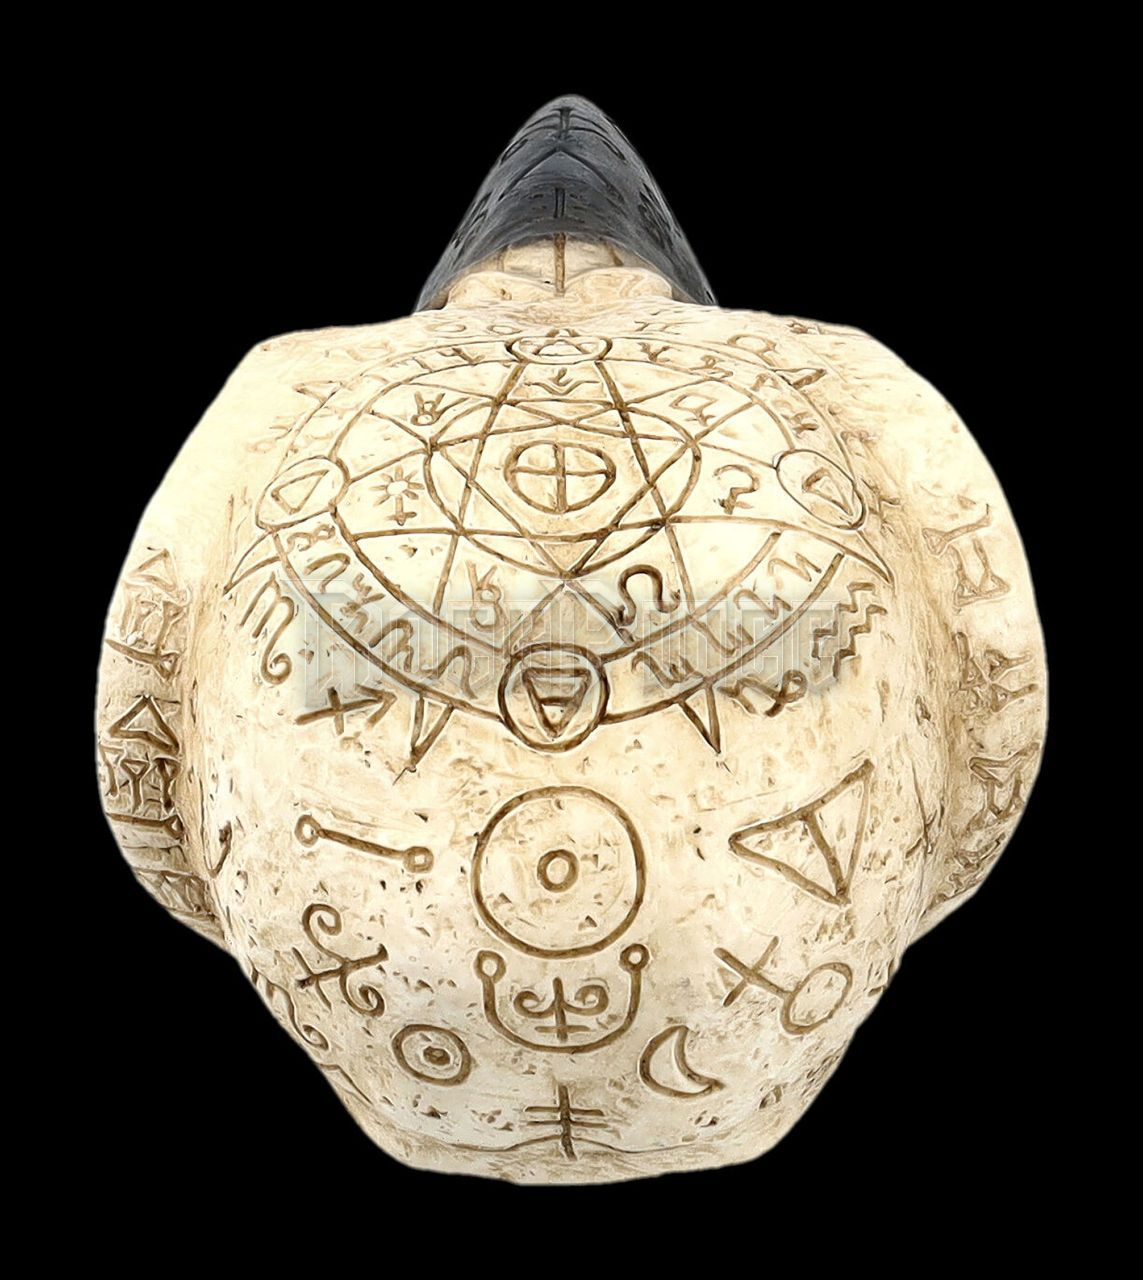 Skull - Raven Skull with Mystic Symbols - 708-7989